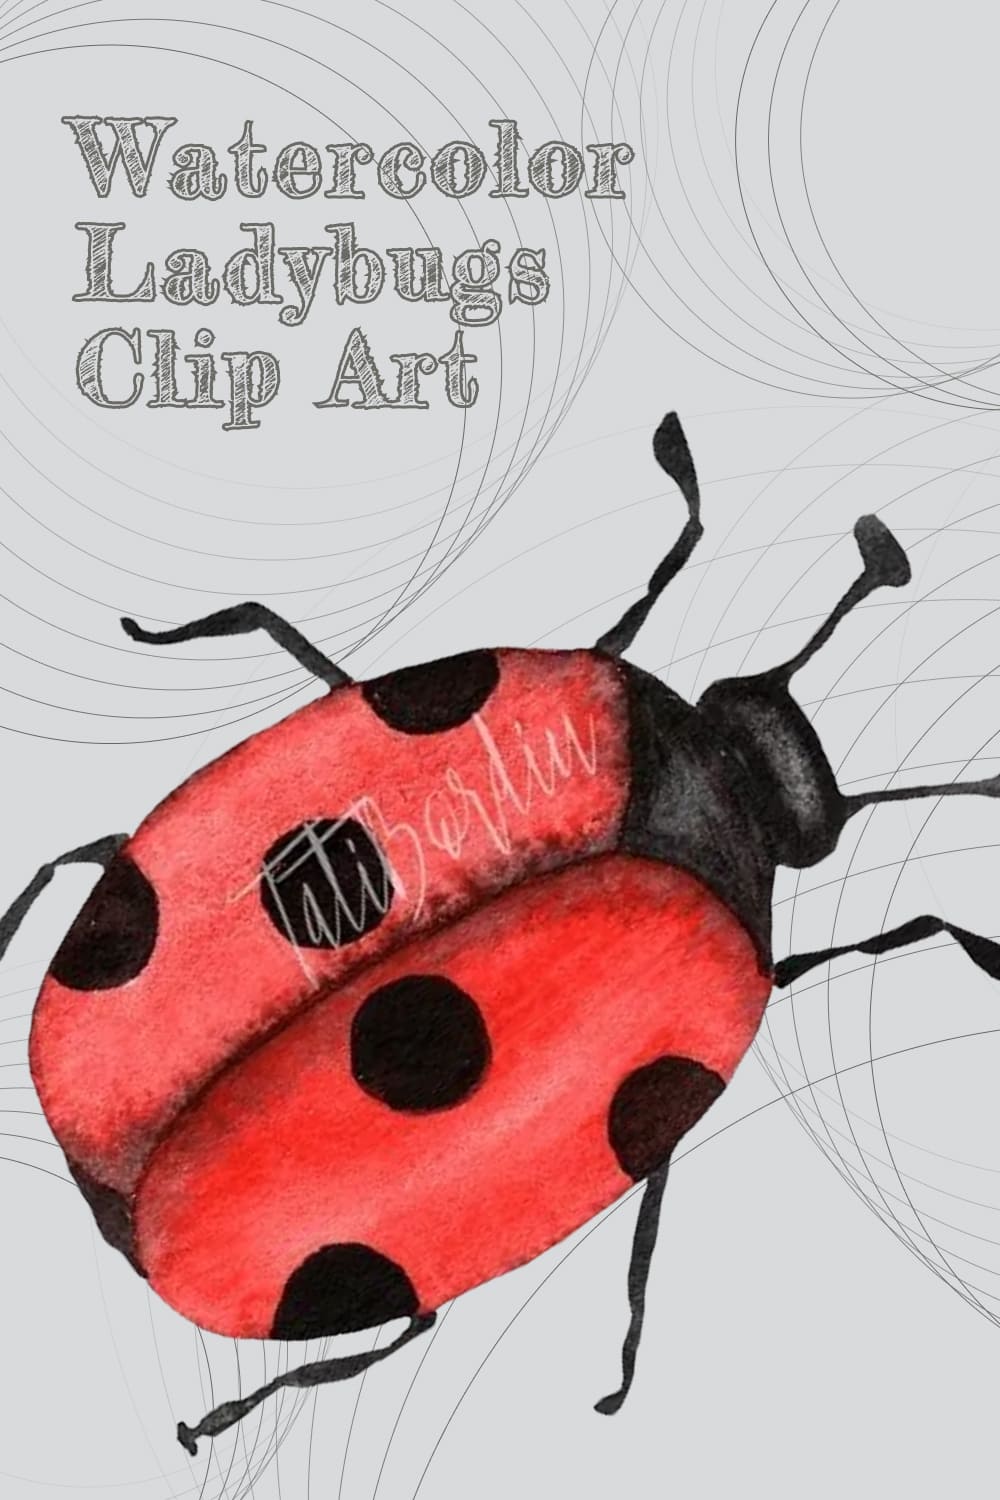 Watercolor ladybugs clip art - pinterest image preview.